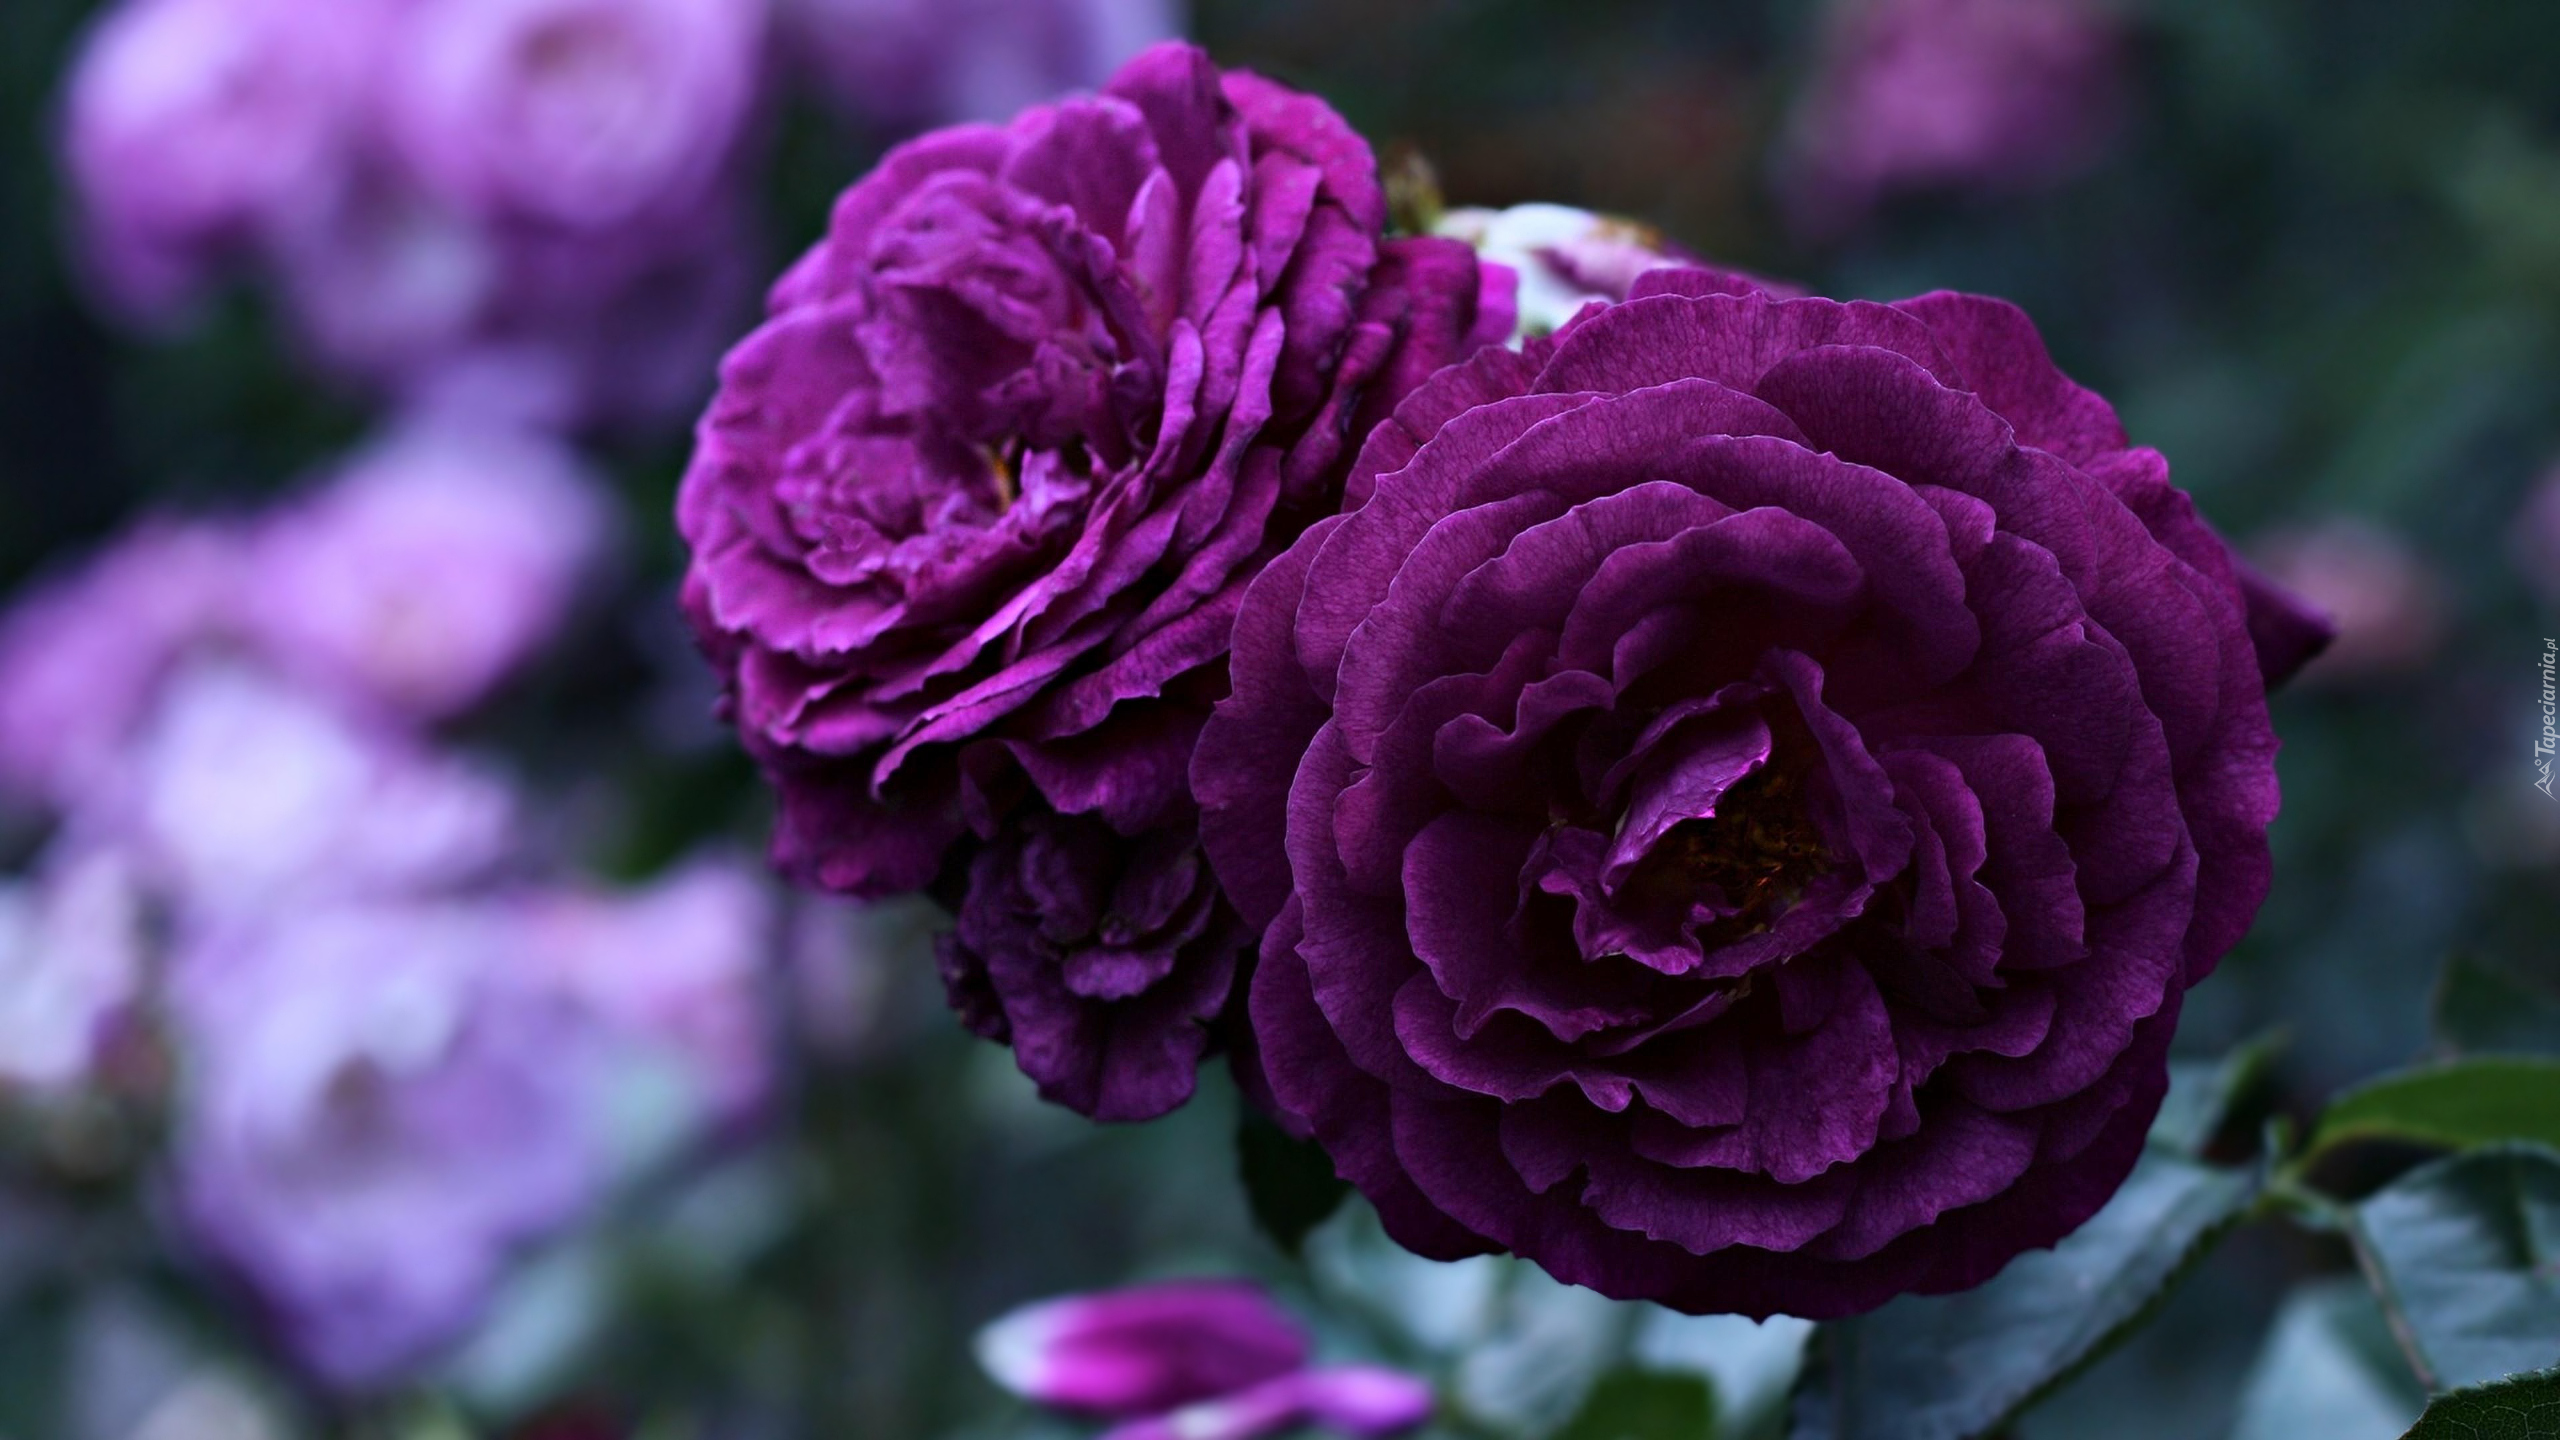 Ciemno-fioletowe, Róże